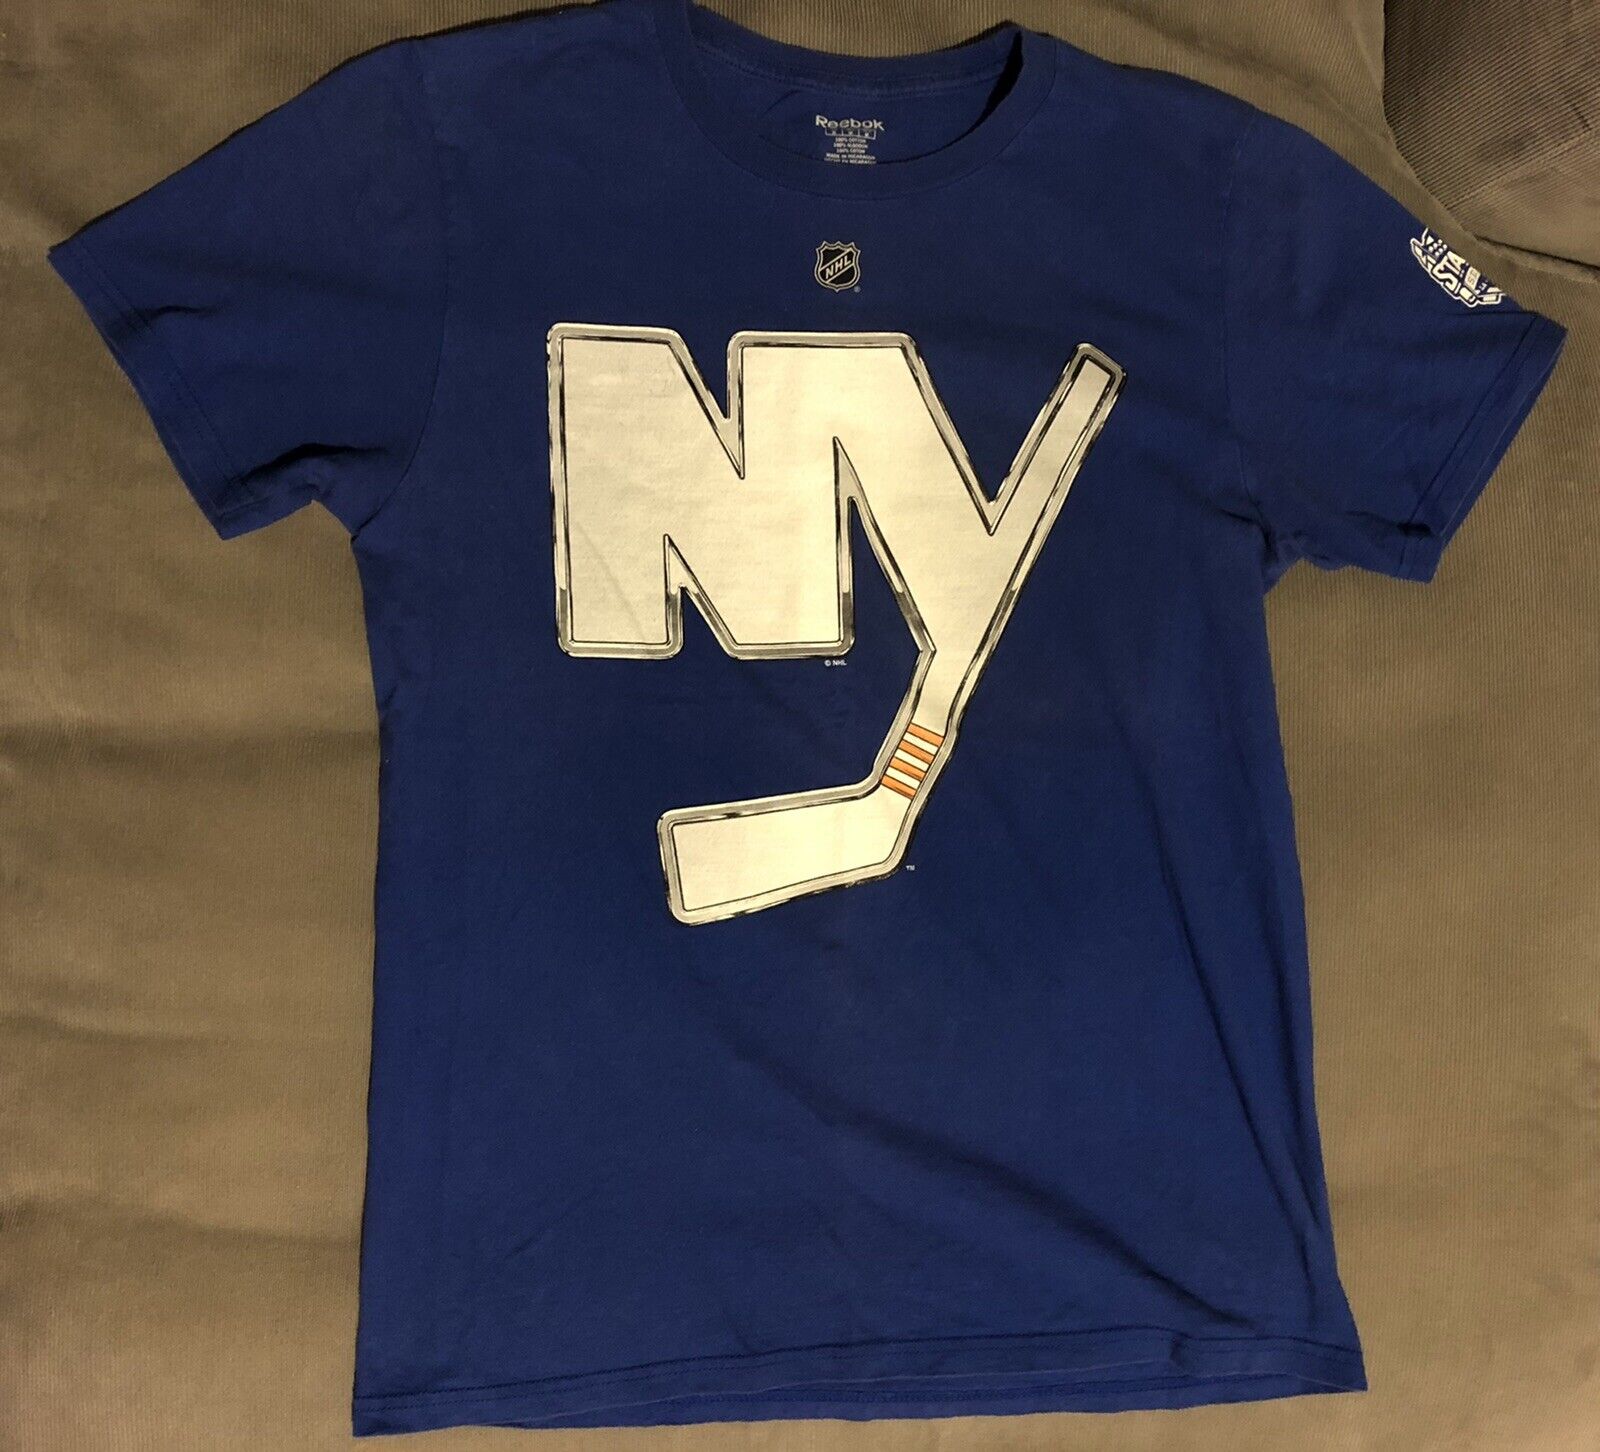 NHL Men's T-Shirt - Blue - M